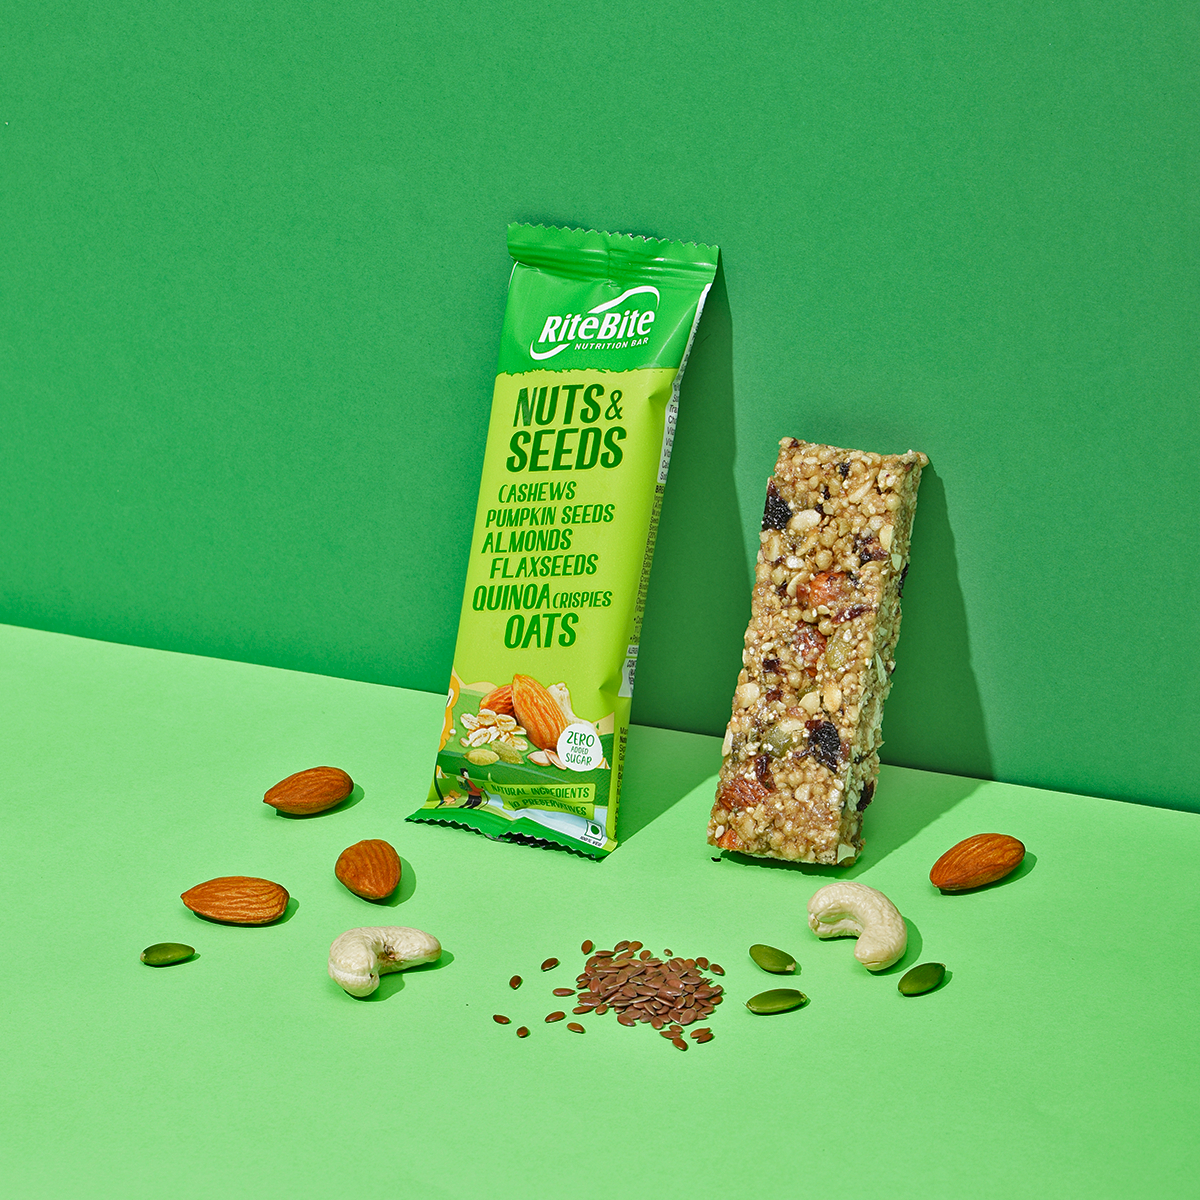 Assorted RiteBite Nutrition Bars Pack of 12 - 2 Units each bar (Choco delite, Peanut butter, Fruit&Seeds, Nuts&Seeds, Sports Bar, Yogurt Berry)